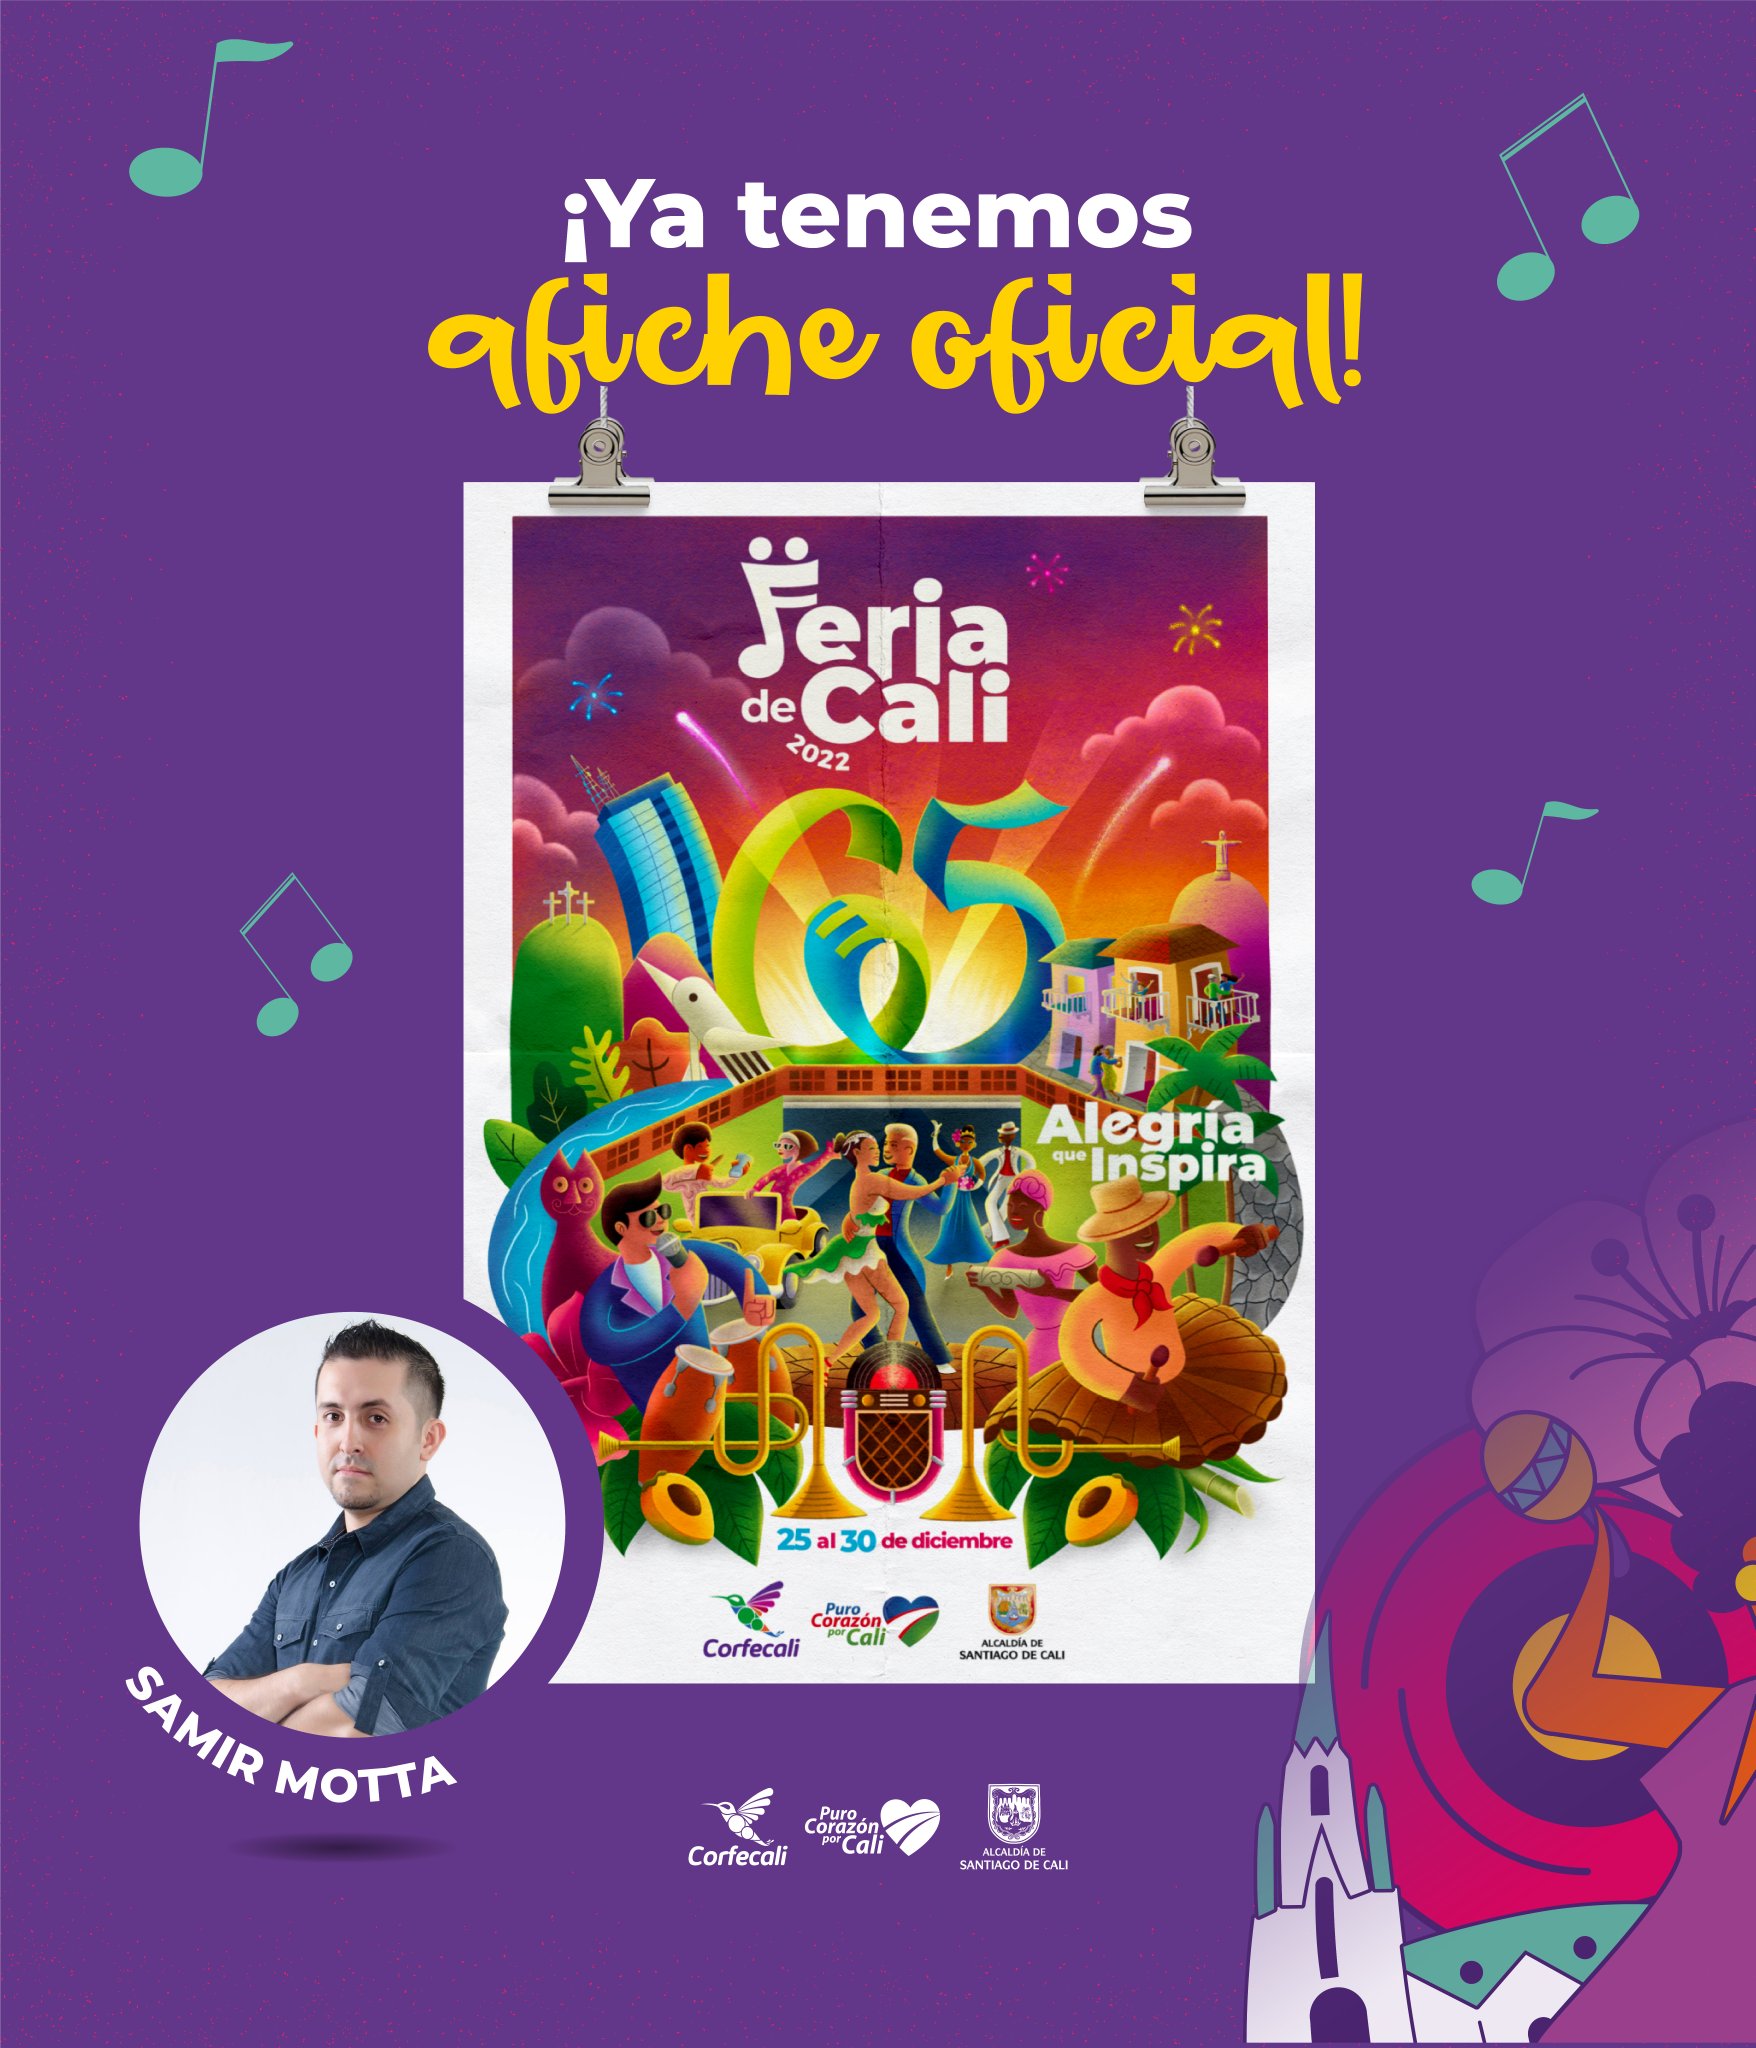 Feria de Cali on Twitter "🥳¡YA TENEMOS NUESTRO AFICHE OFICIAL!🥳 😍Este